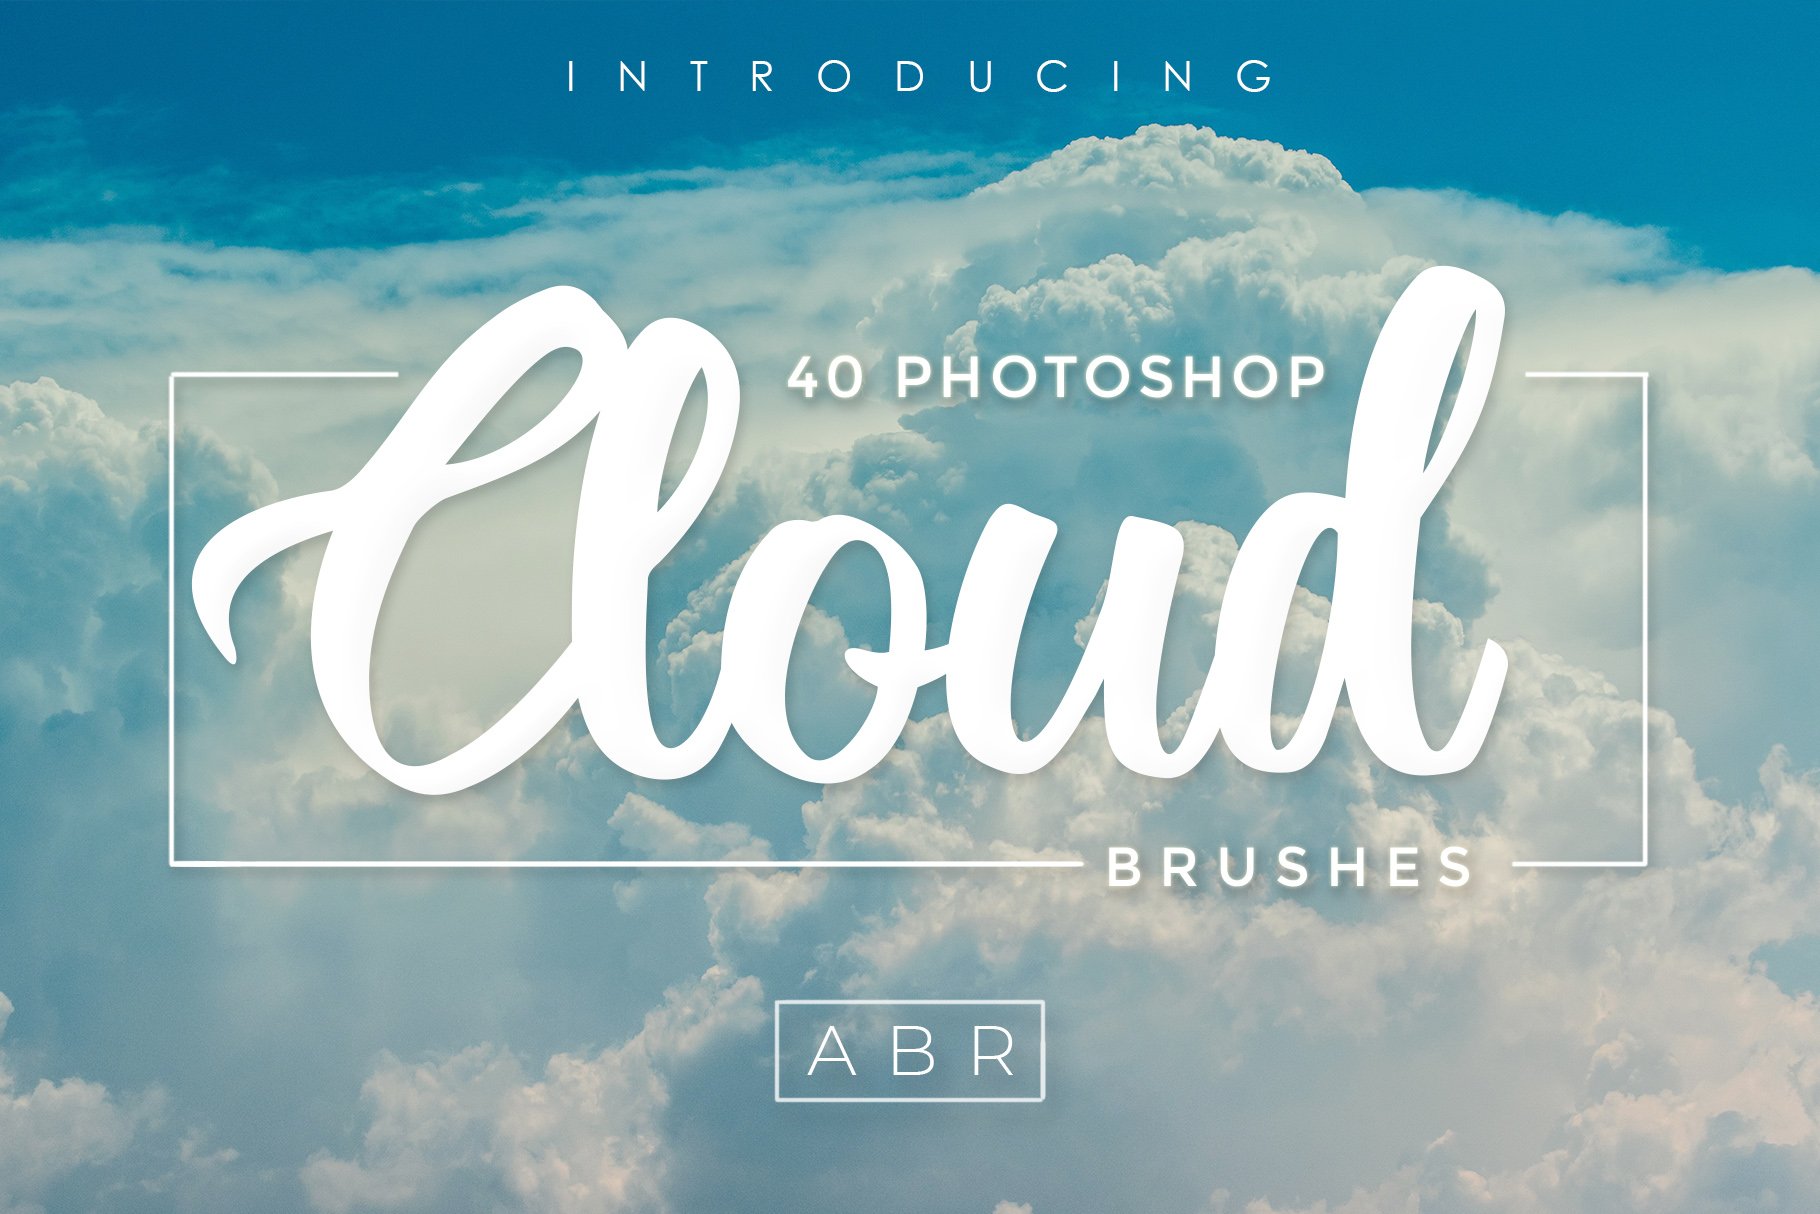 40 Cloud Brushes for Photoshopcover image.